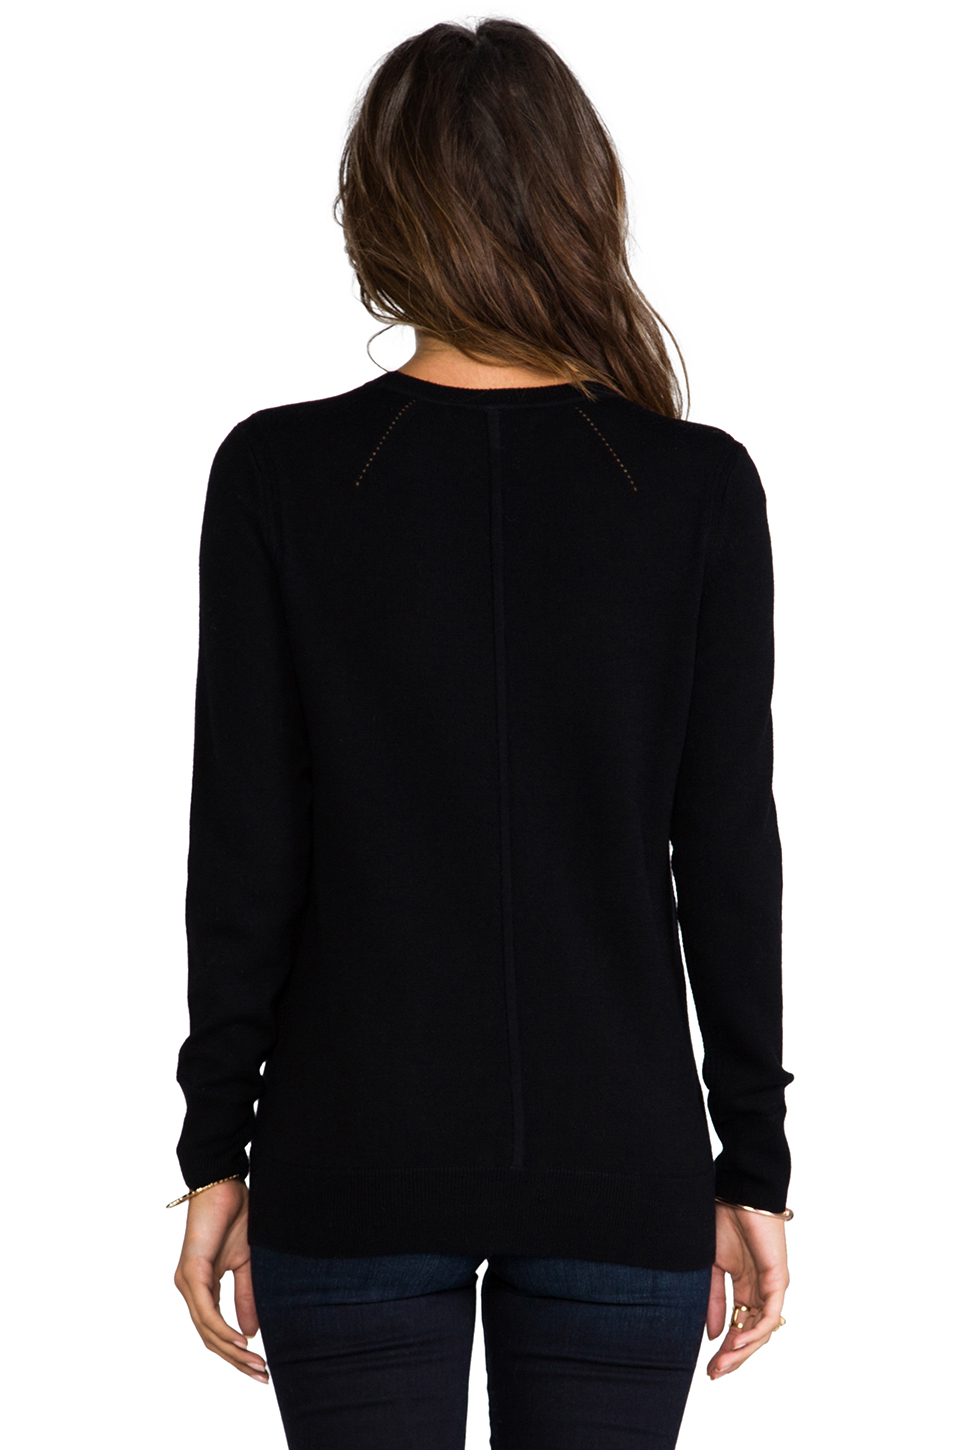 Lyst - Rag & Bone Natalie Sweater in Black in Black